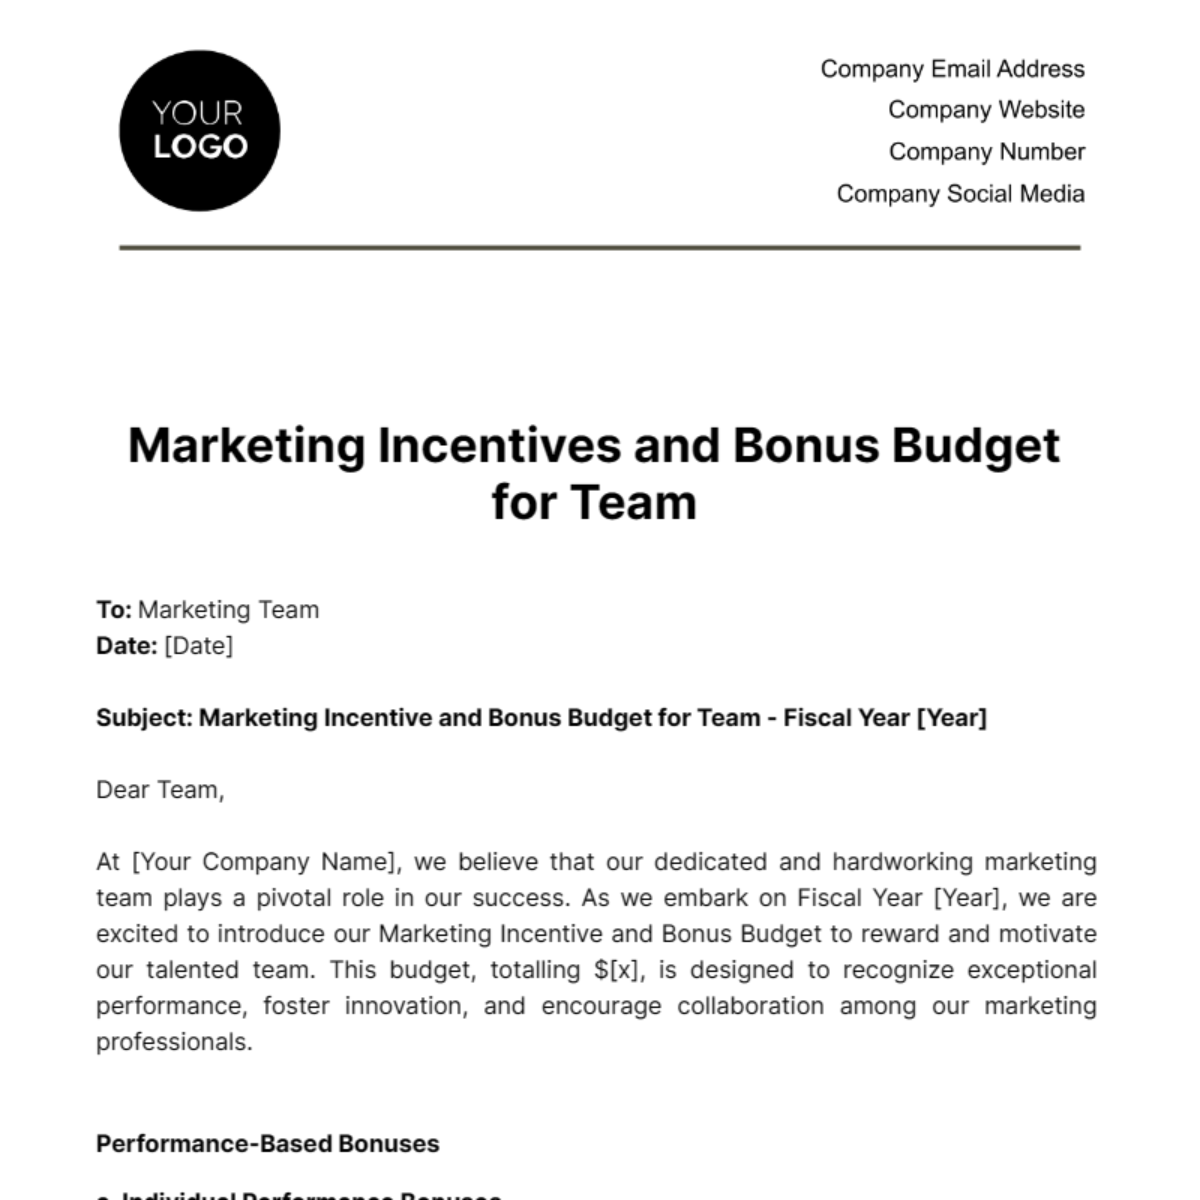 Free Marketing Incentive and Bonus Budget for Team Template